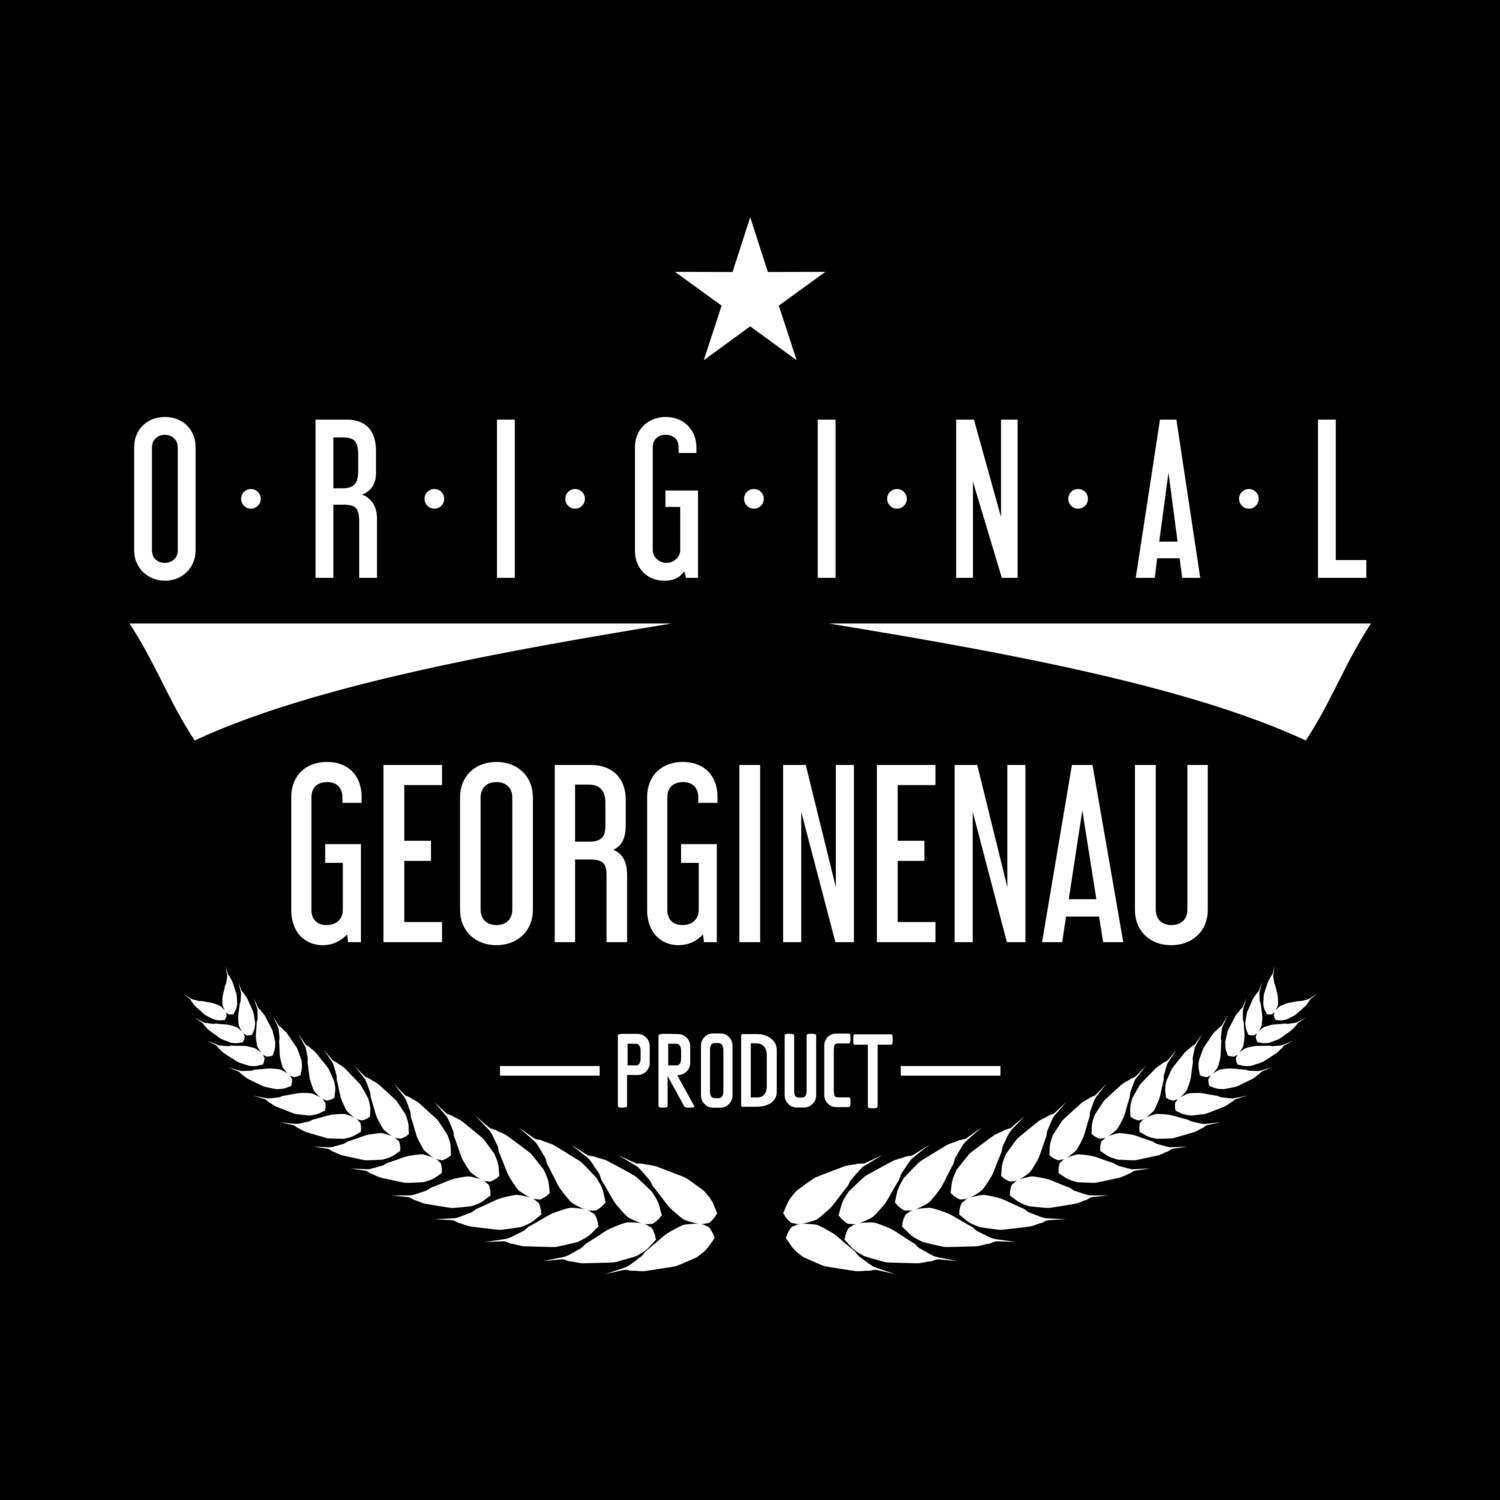 Georginenau T-Shirt »Original Product«